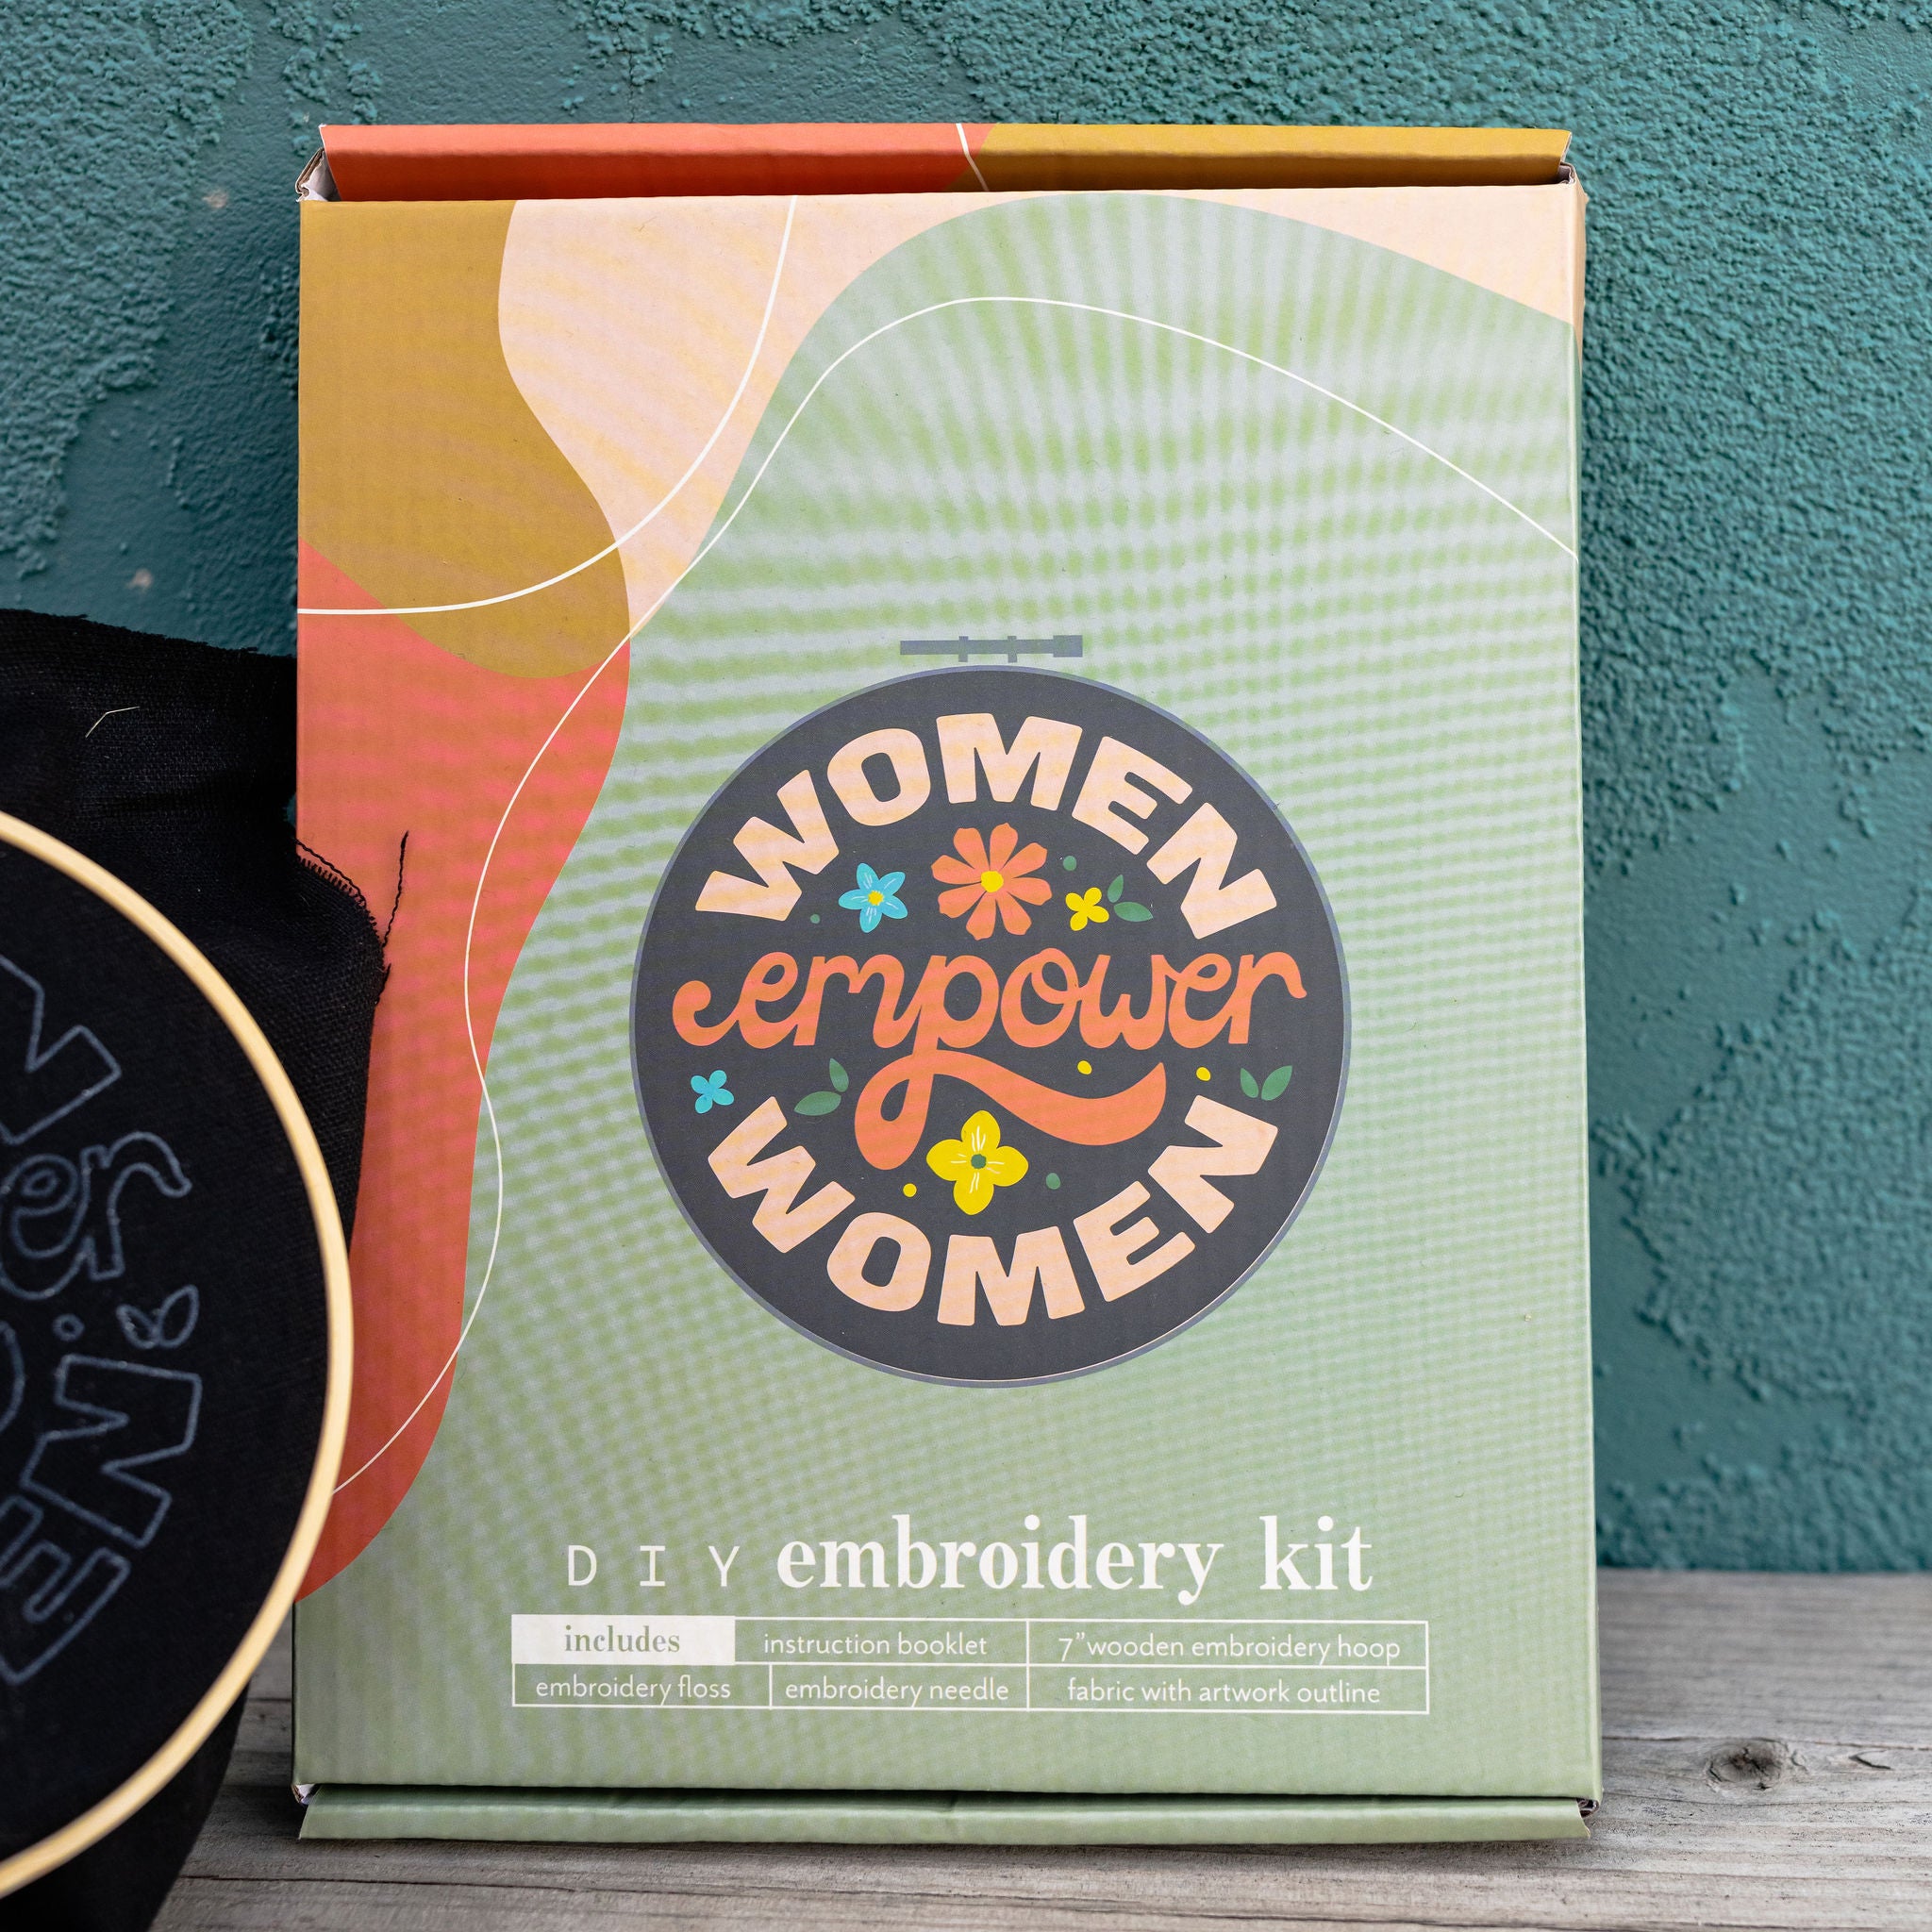 Women Empower Women Embroidery